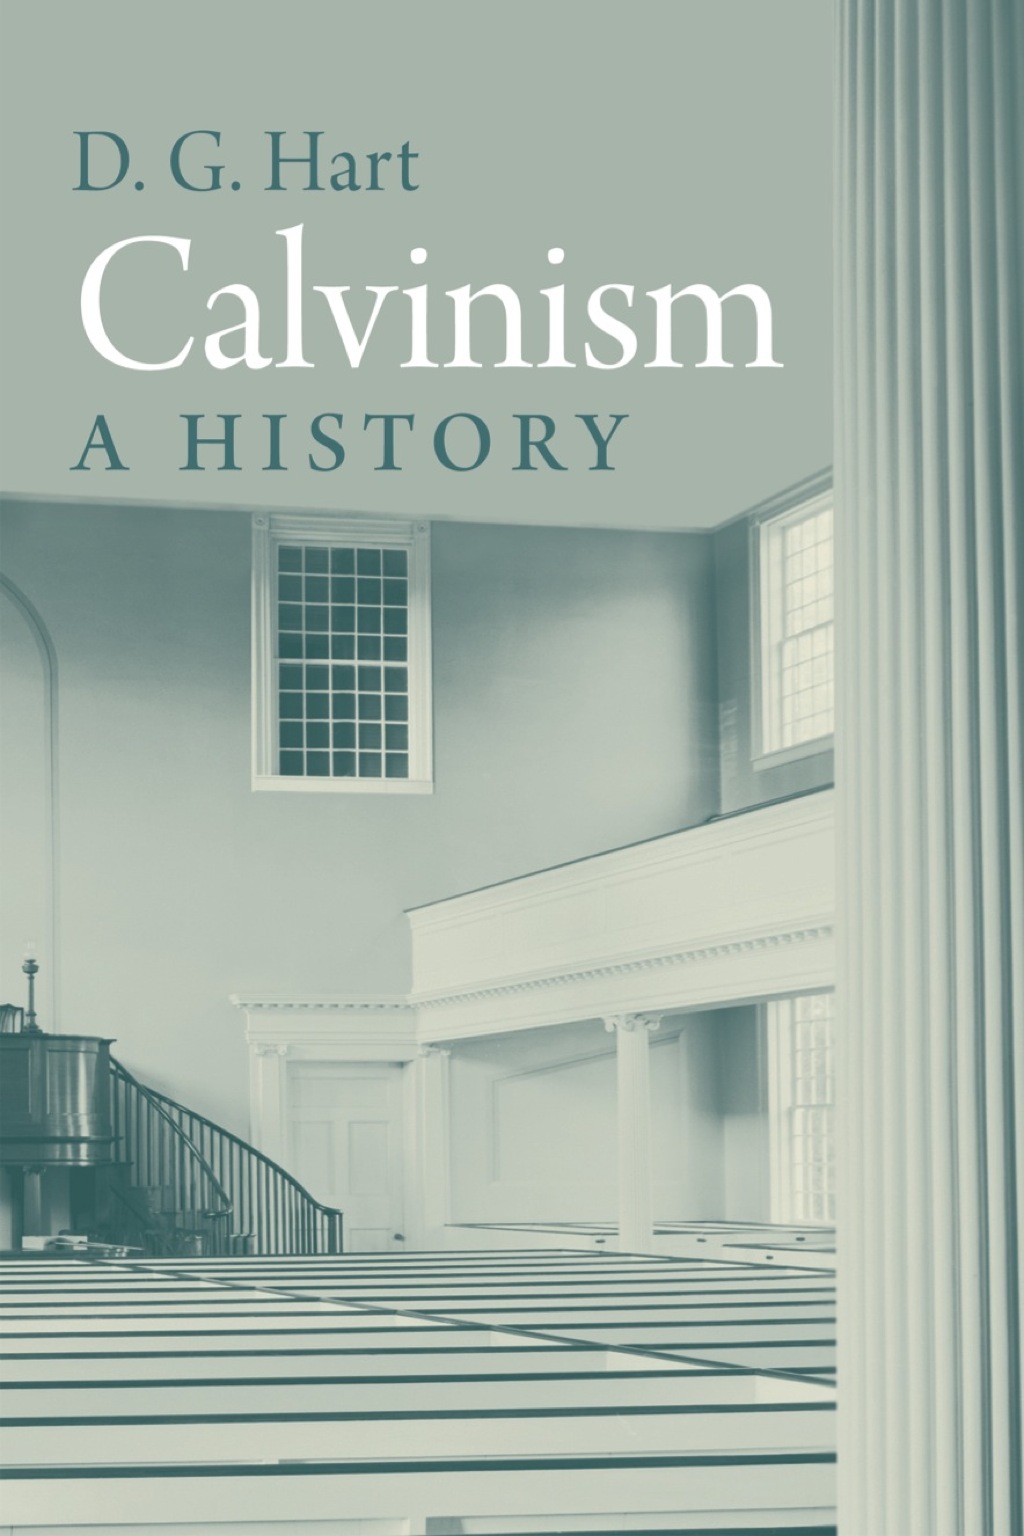 Calvinism: A History (eBook) - Darryl Hart